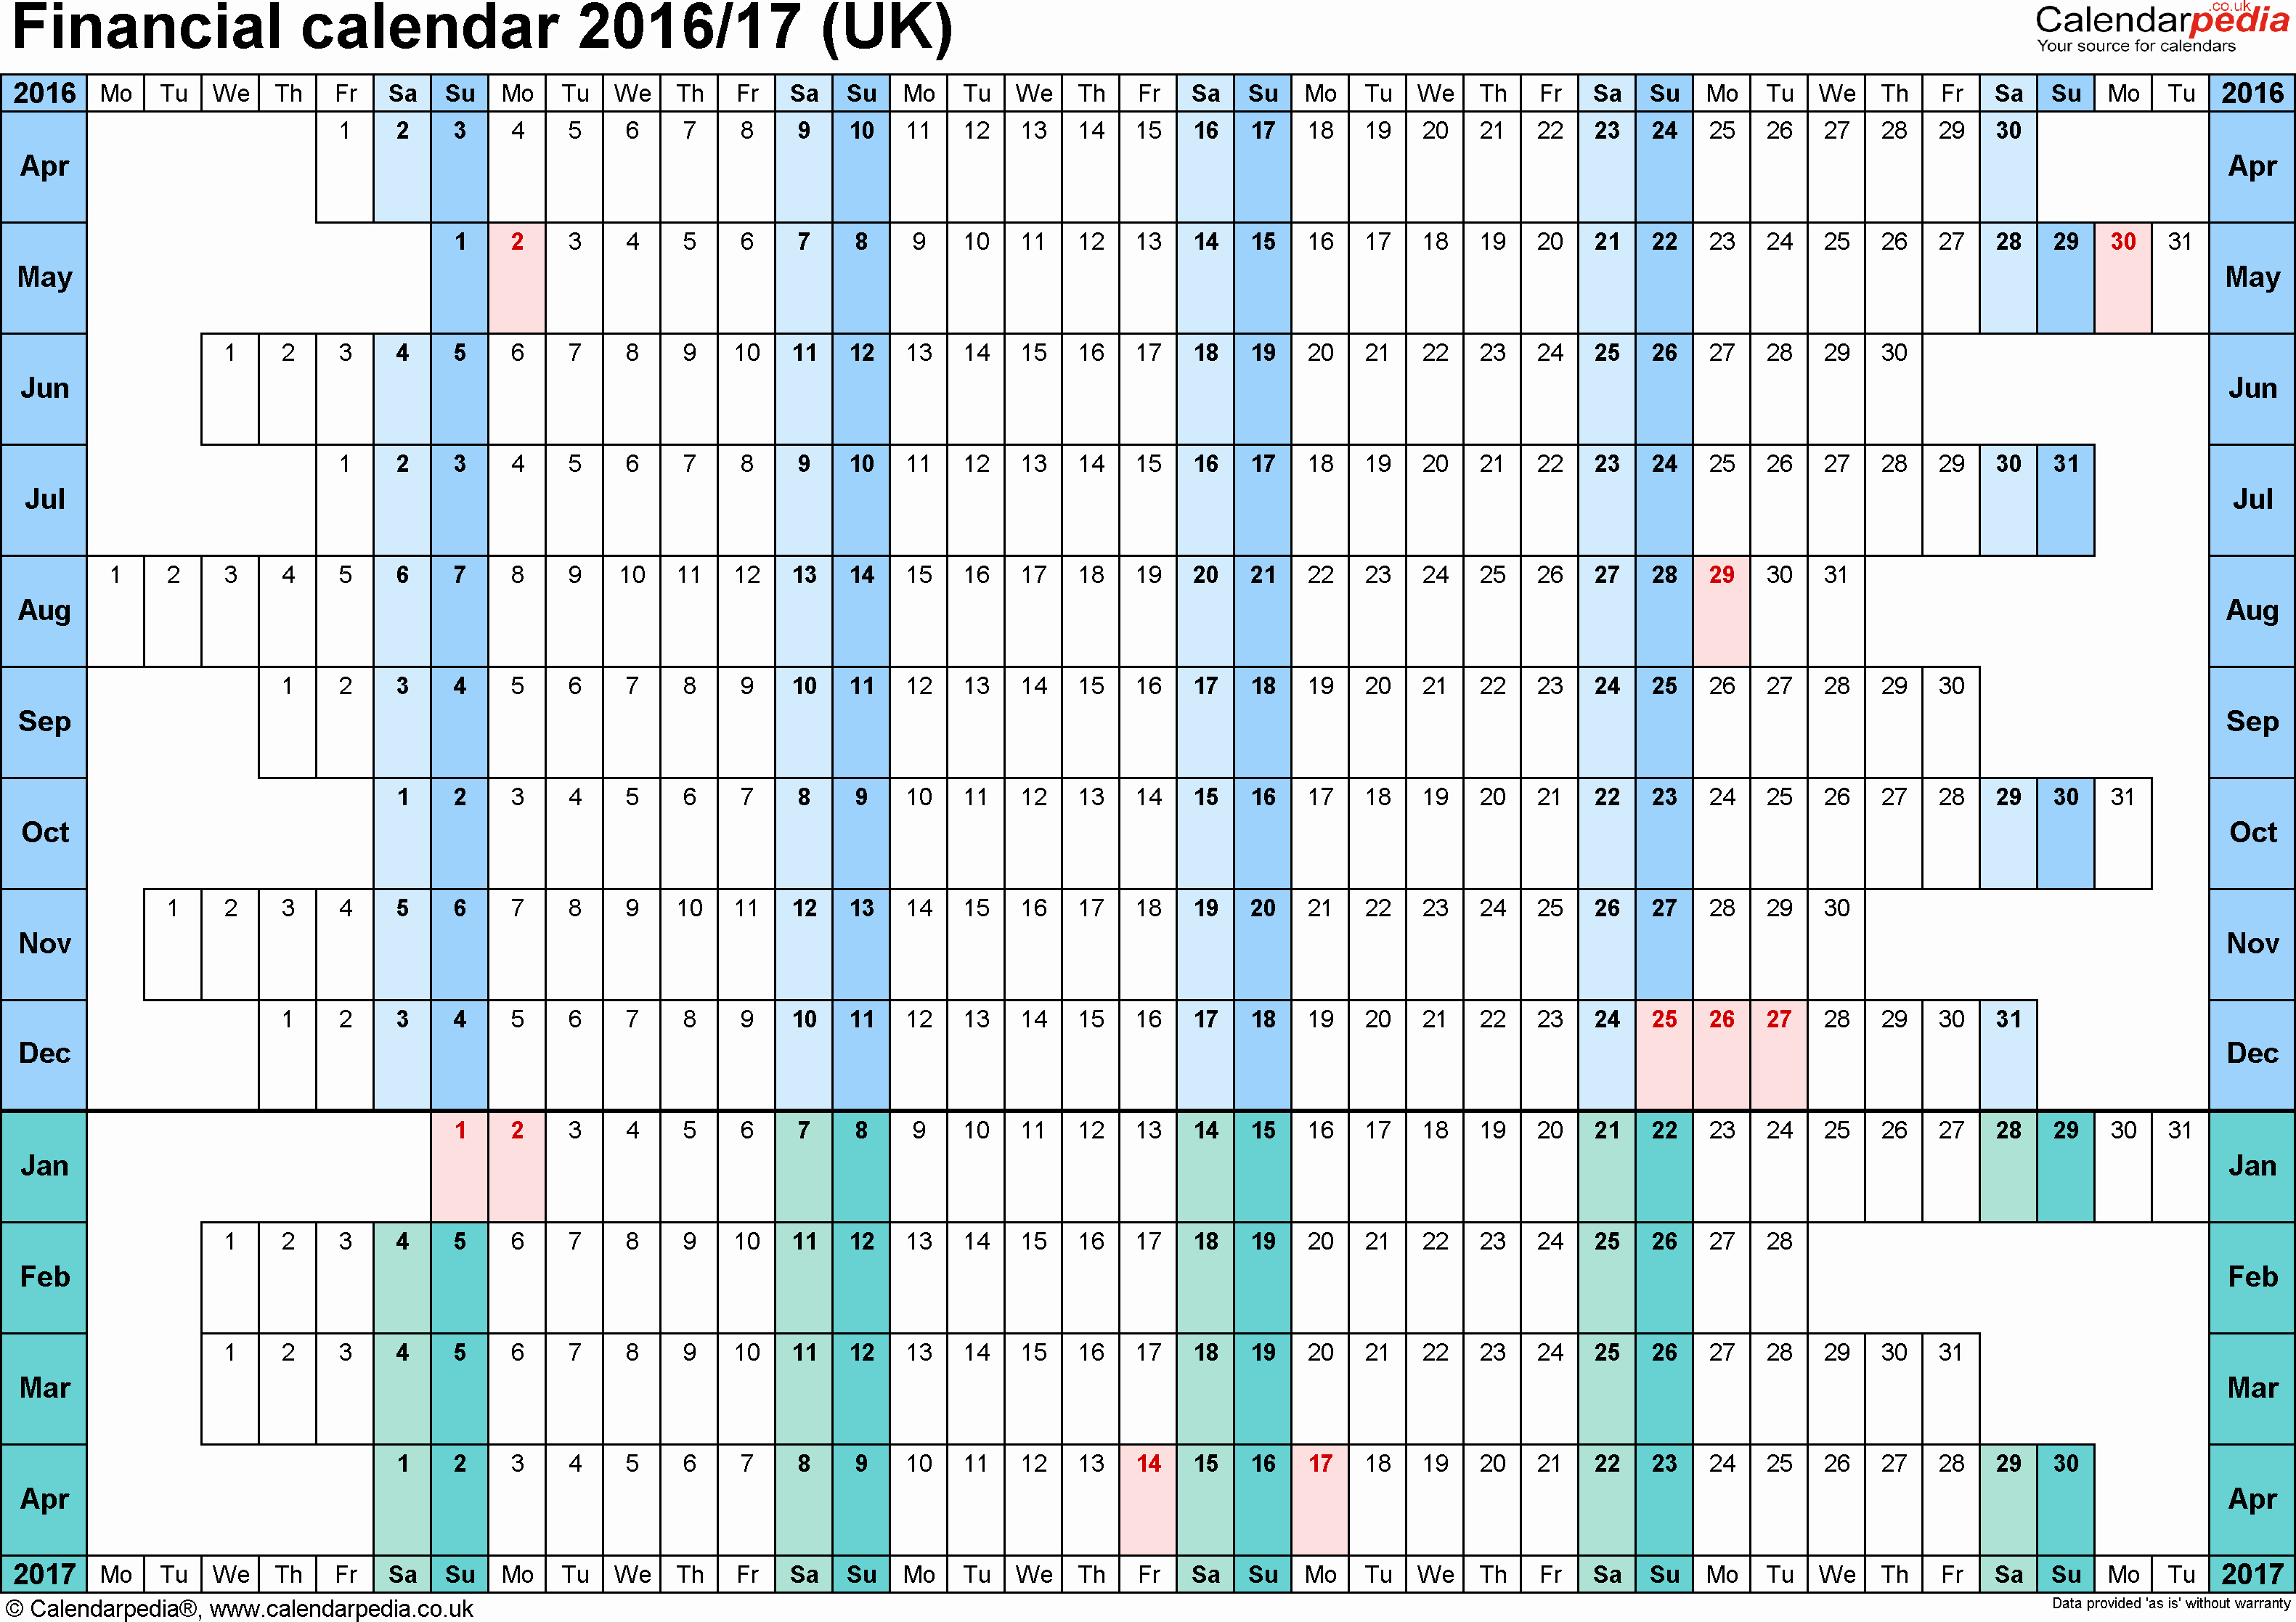 Monthly Calendar 2016-17 Unique Financial Calendars 2016 17 Uk In Pdf format